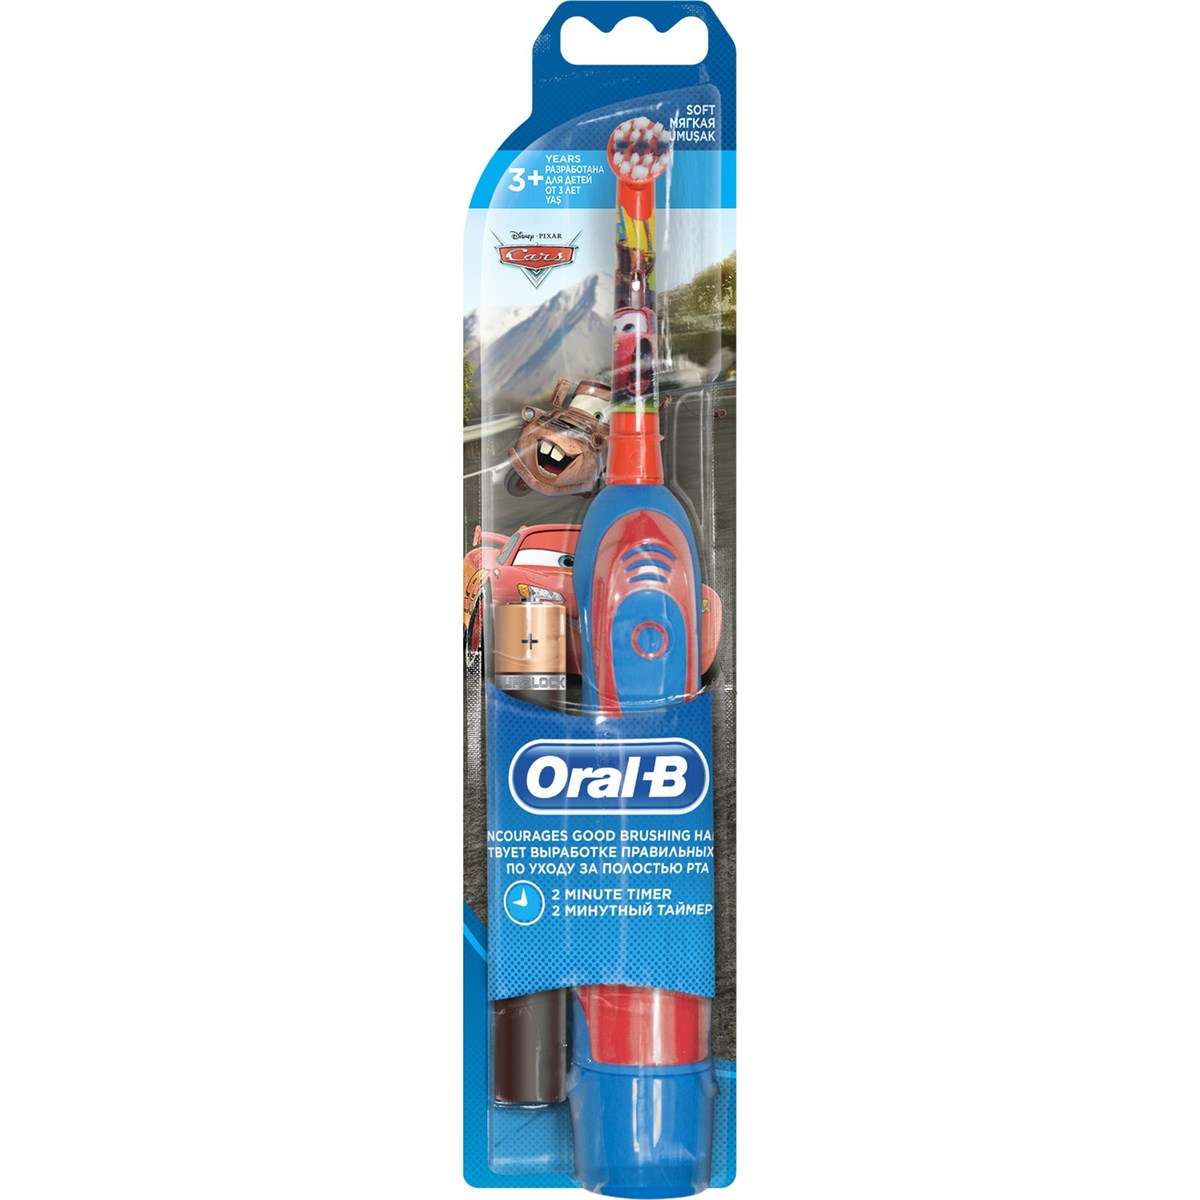 Oral-B Battery Power Toothbrush Cars-LeylekKapida.com